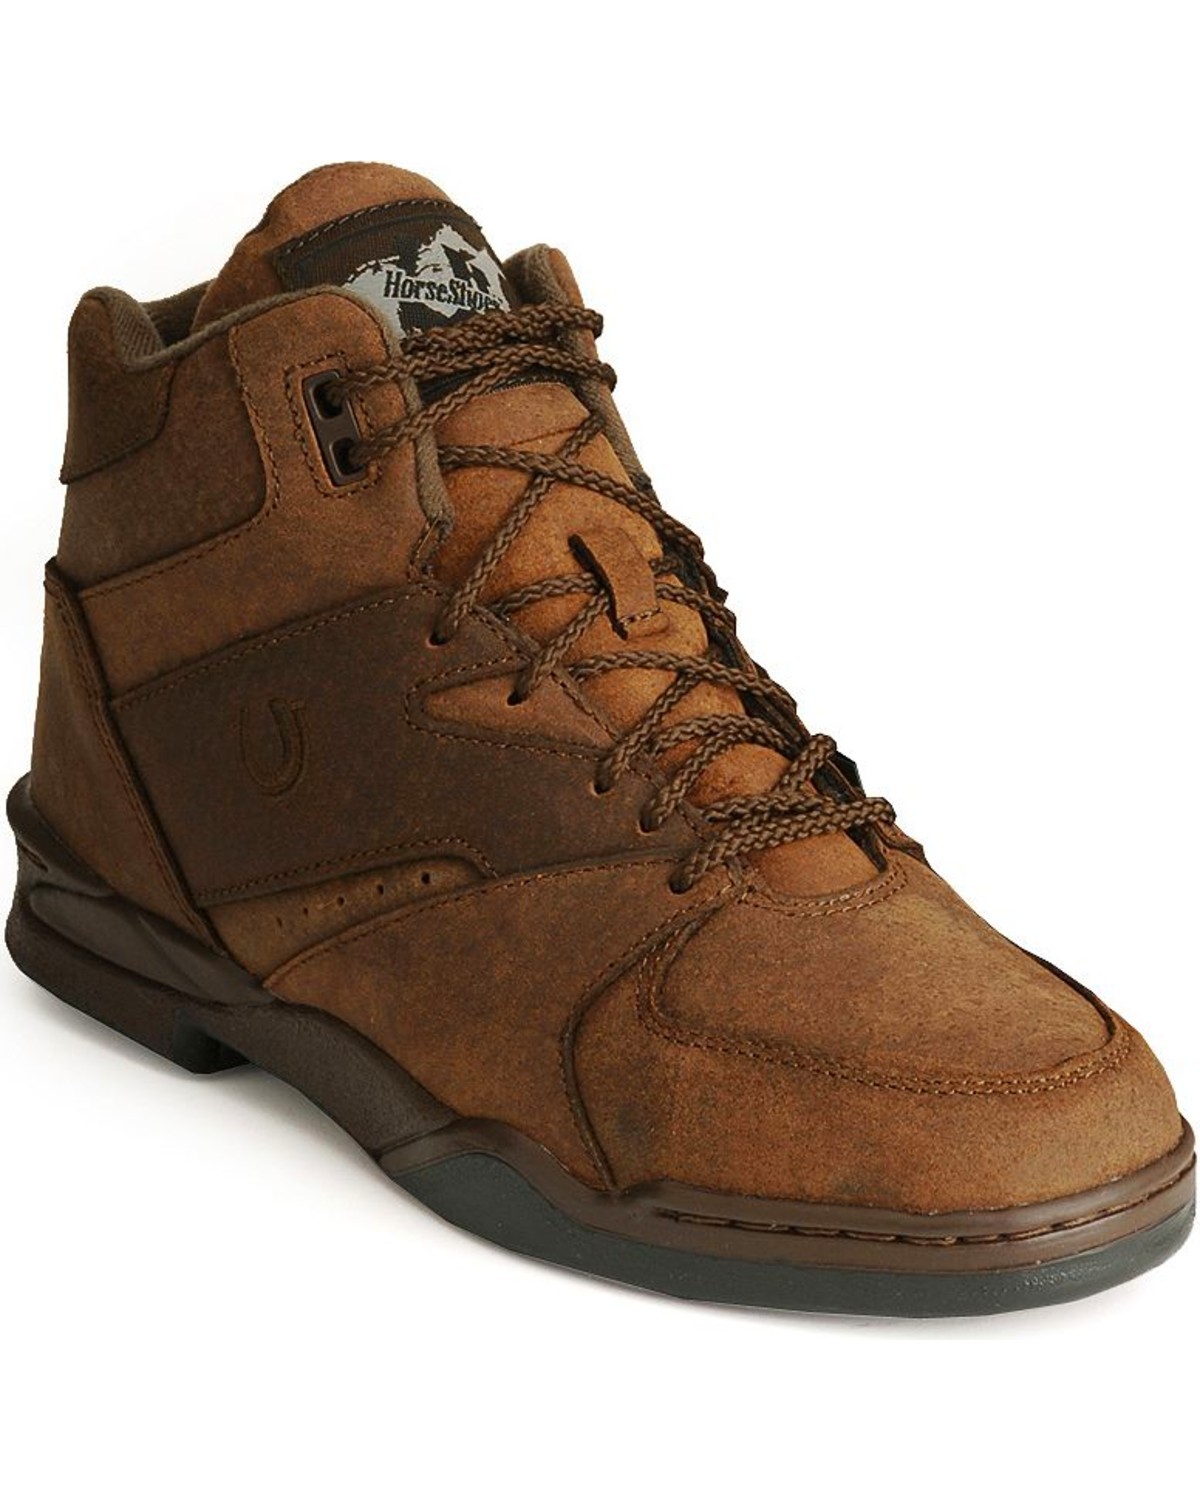 Roper Men's Chipmunk HorseShoes Classic Original Boots